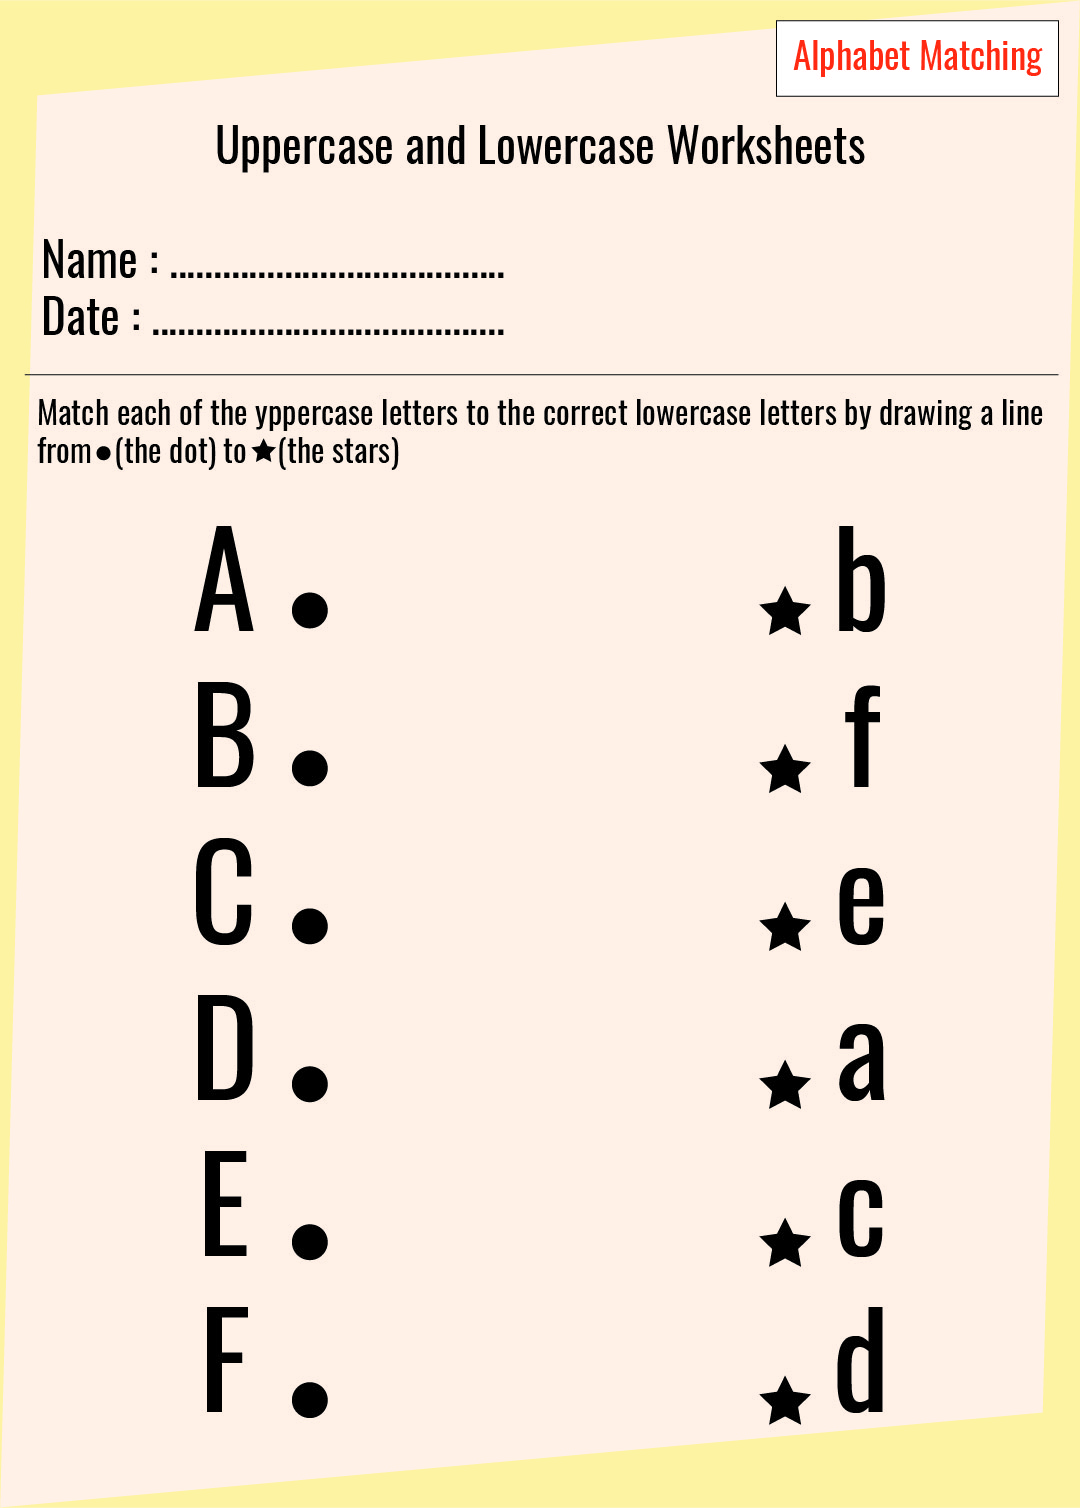 Alphabet Uppercase and Lowercase Matching Worksheet